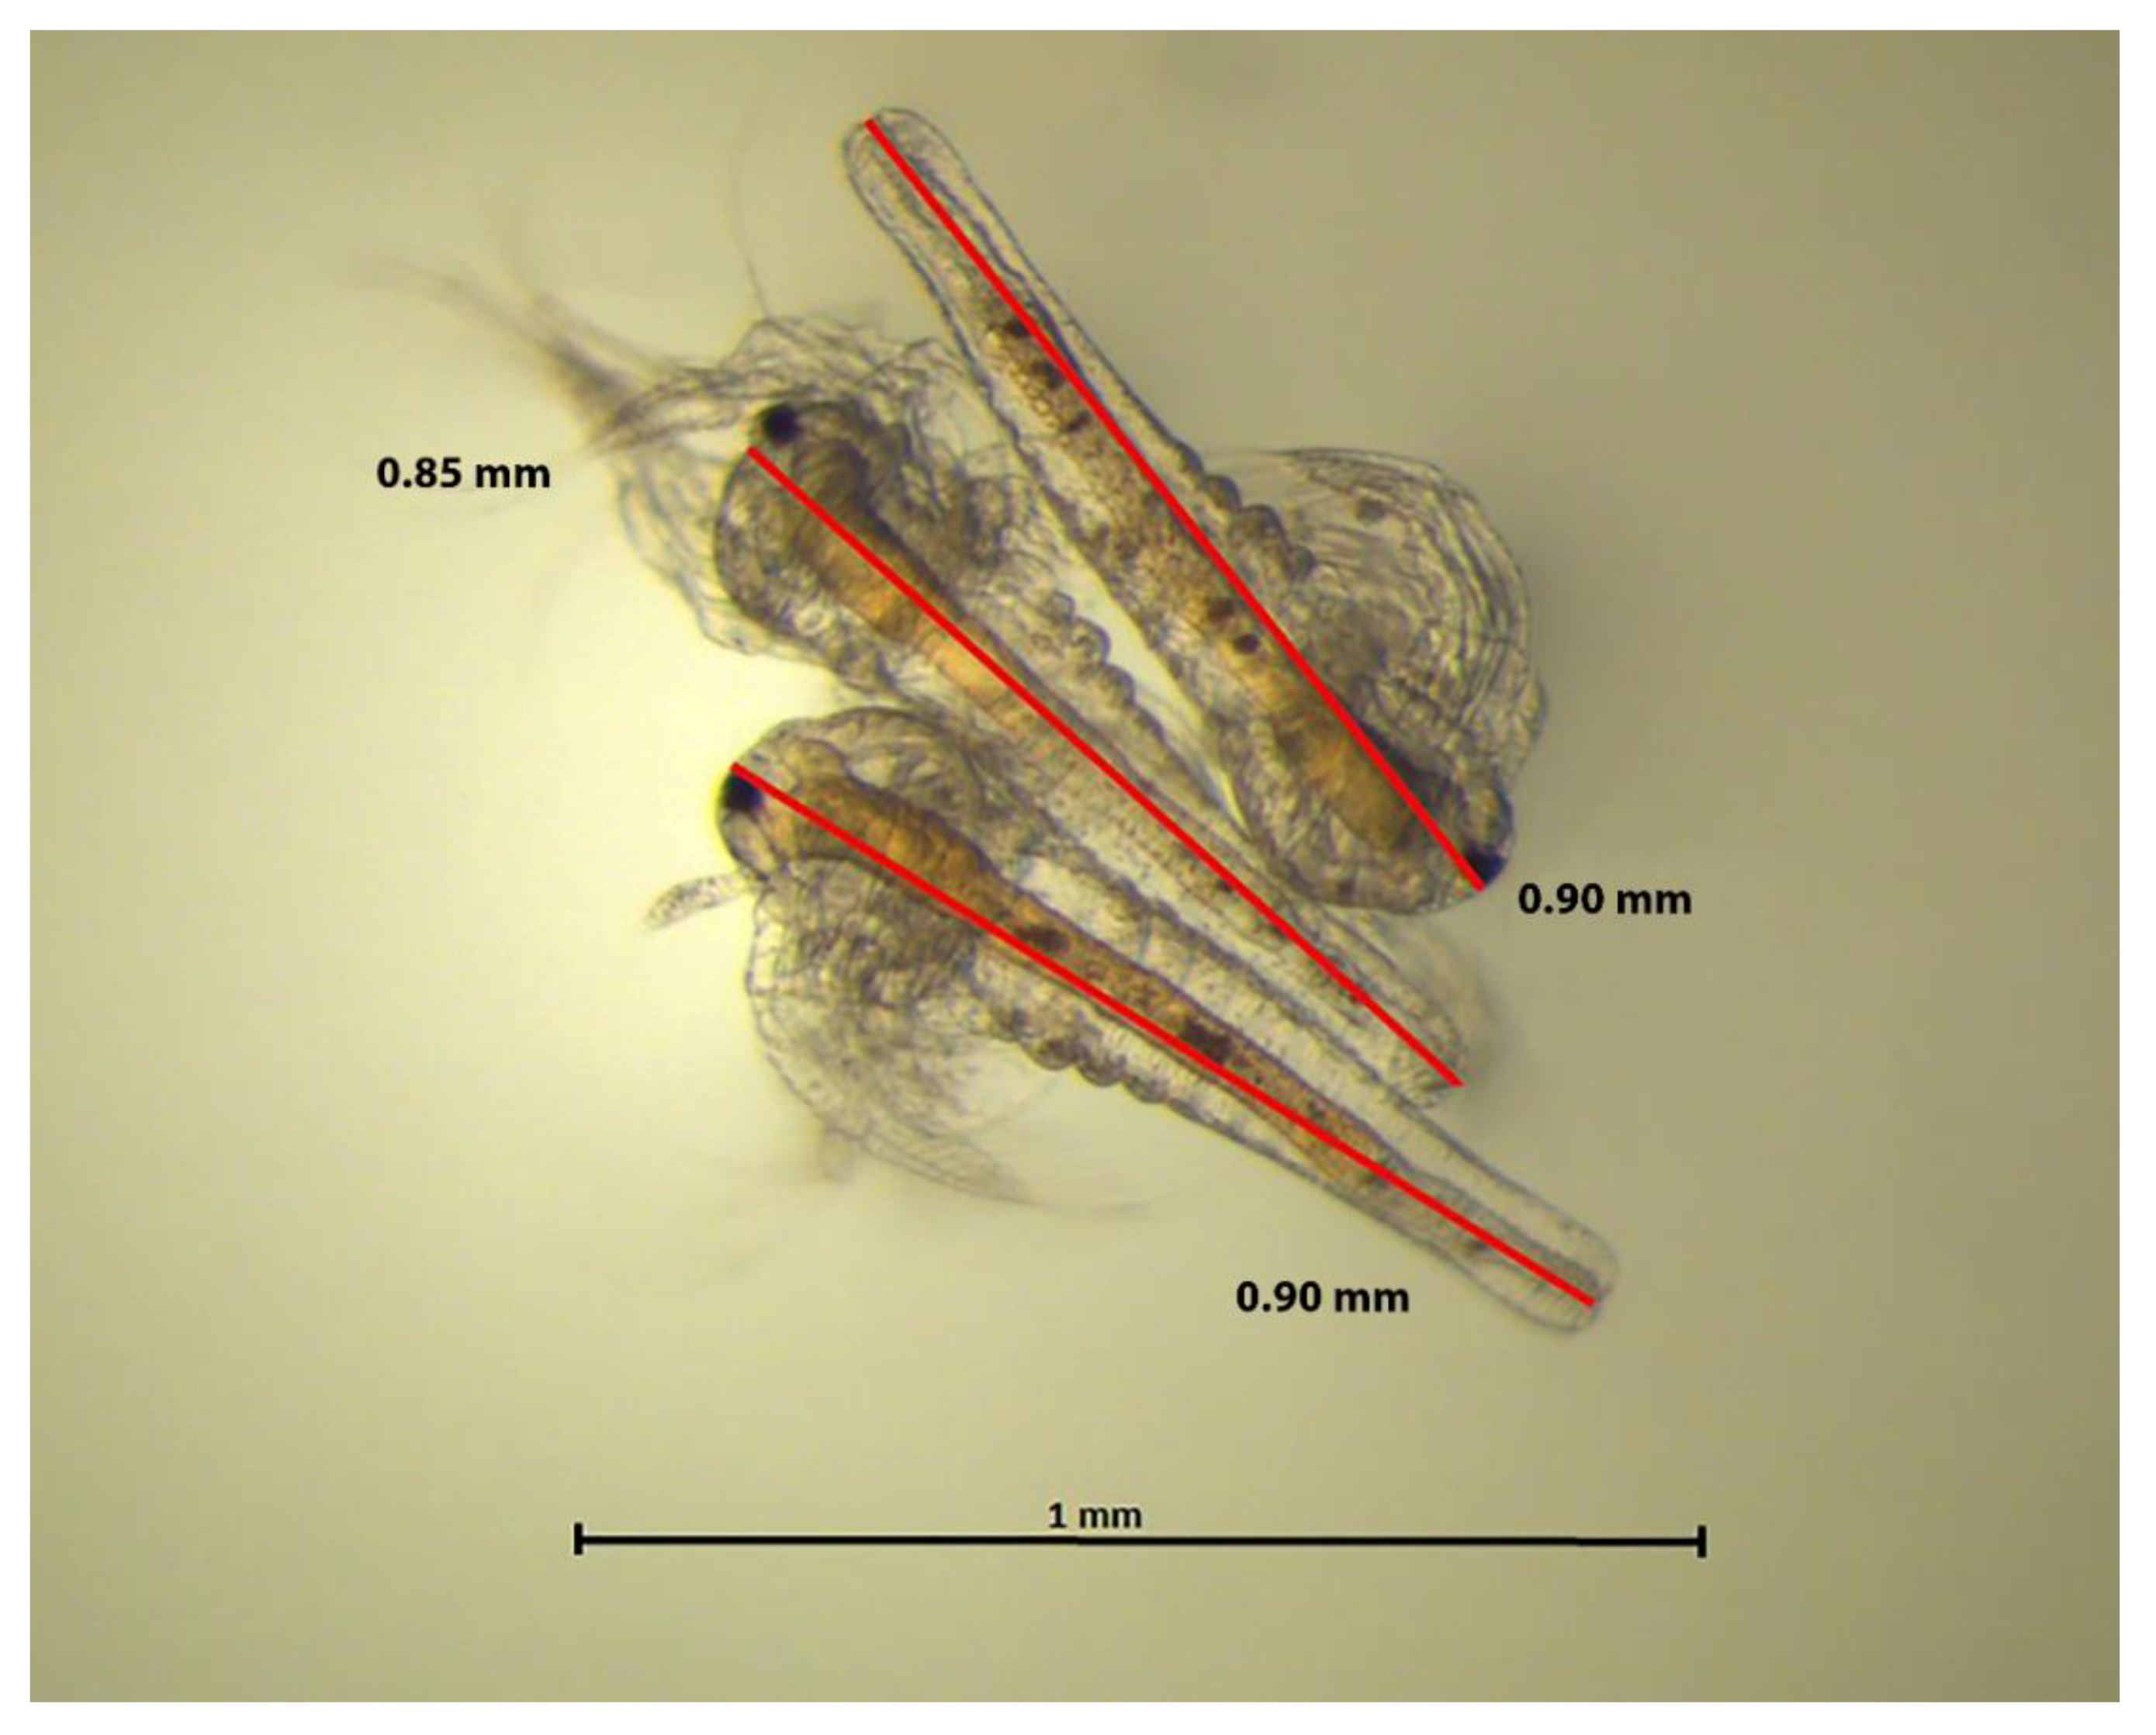 Larval stages of the Brine Shrimp (Artemia salina) A, Nauplius